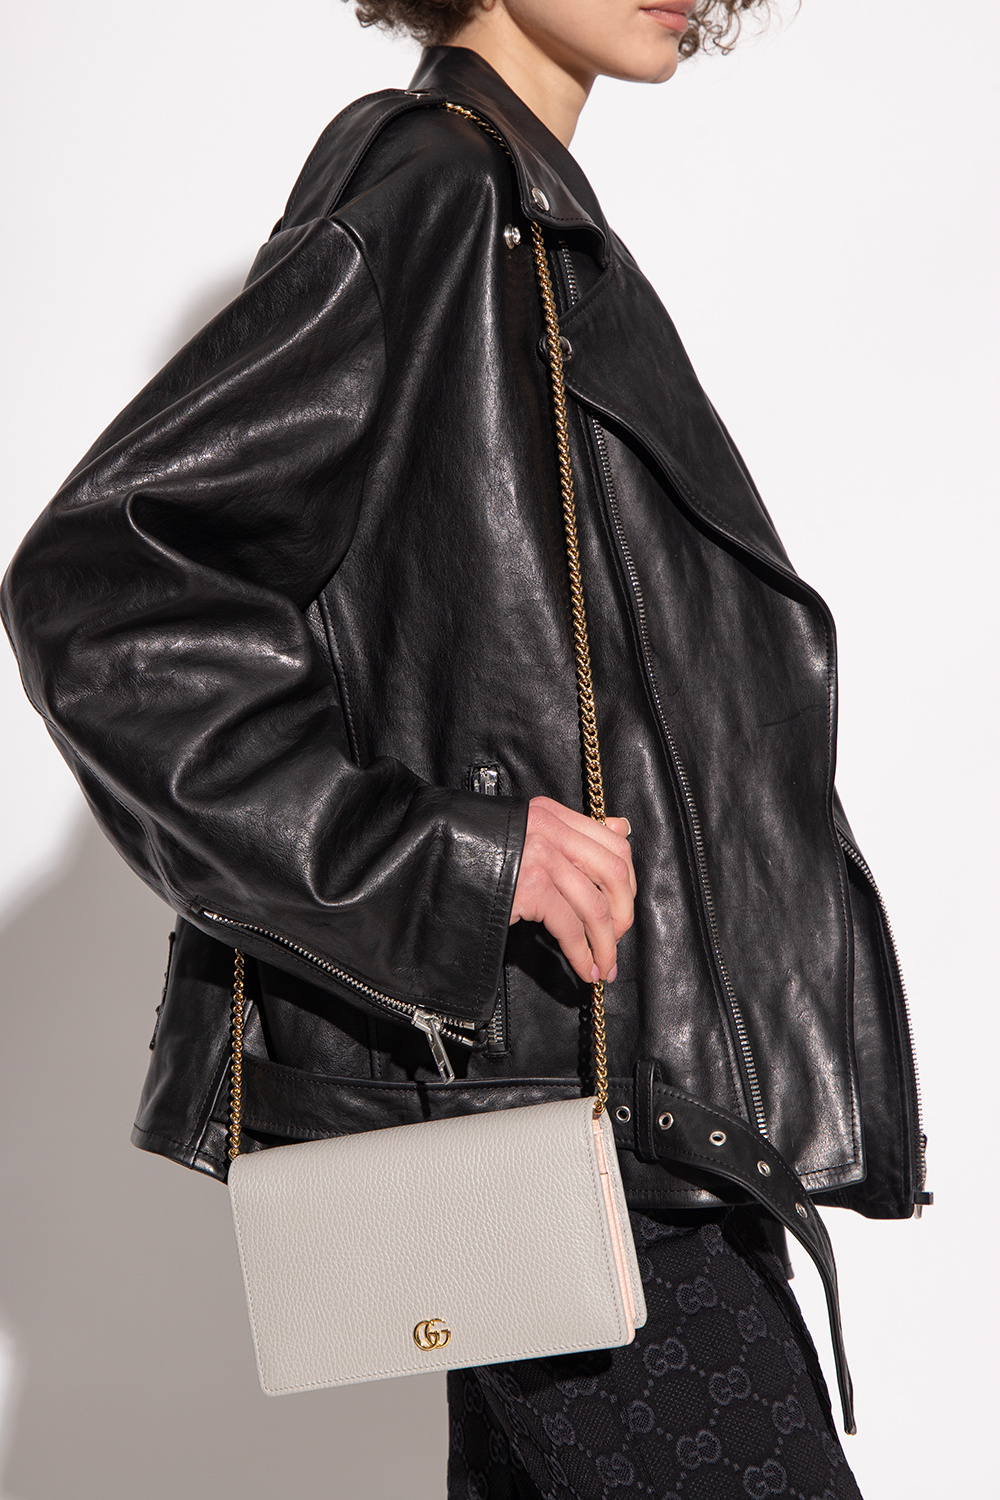 Gucci Gg Marmont Leather Mini Chain Bag in Grey